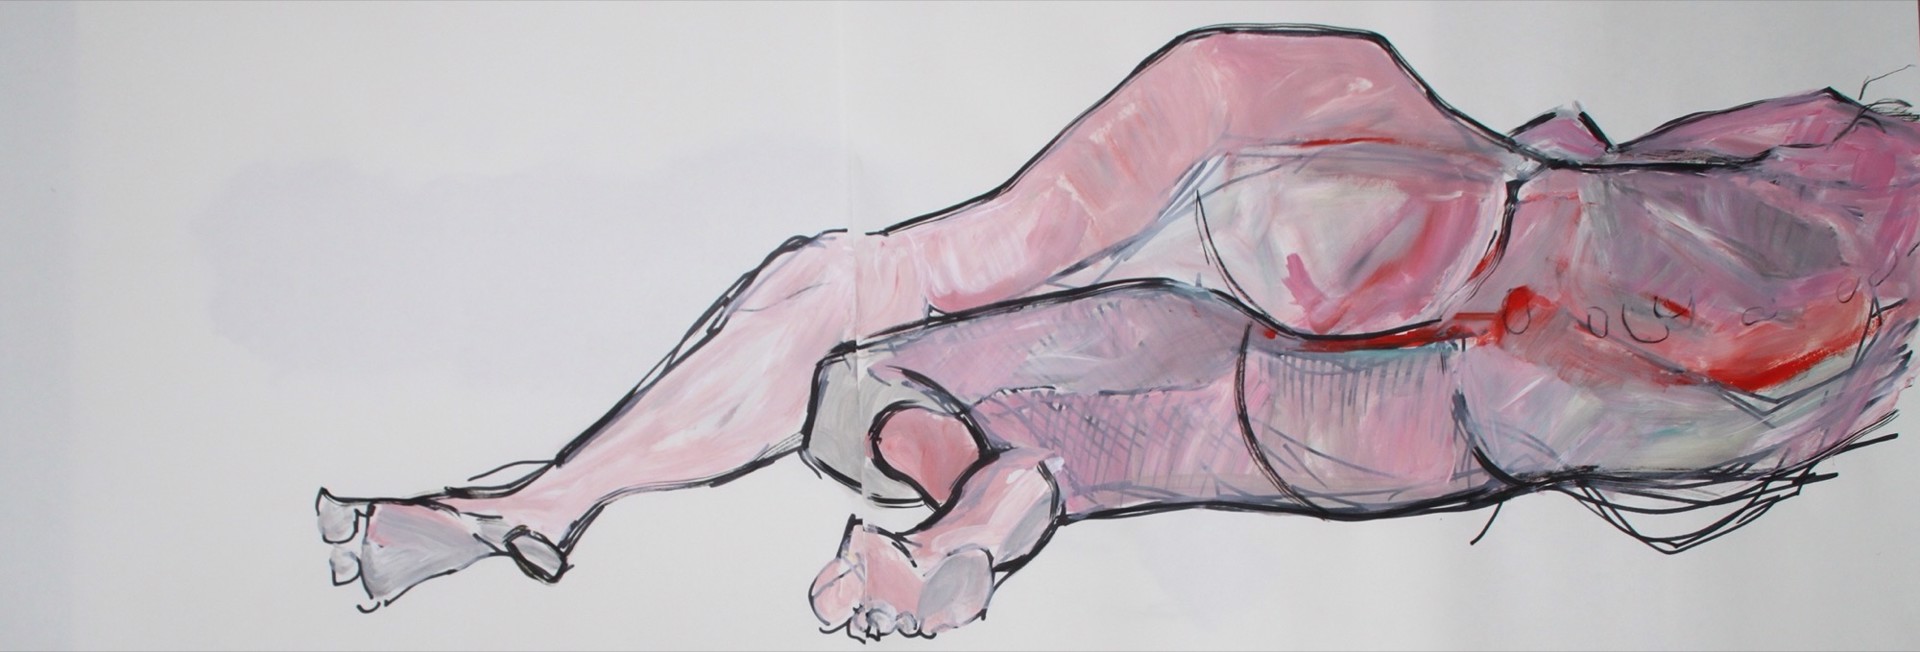 Pink Reclining Figure by Rachael Van Dyke